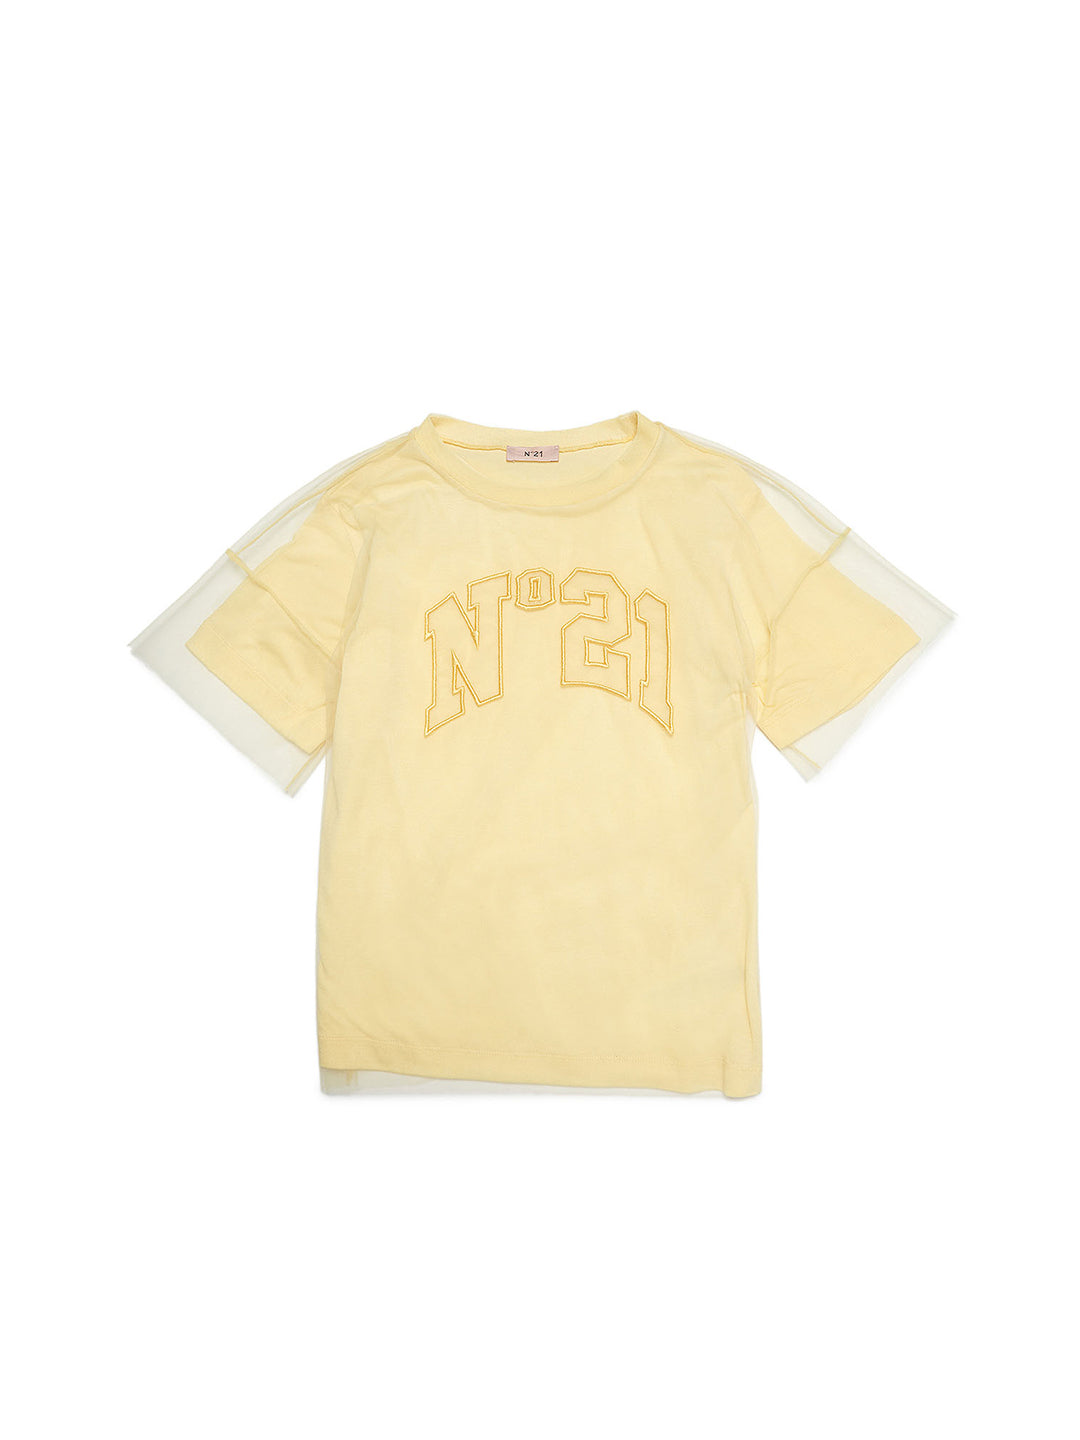 N21 kids t shirt con toulle giallo